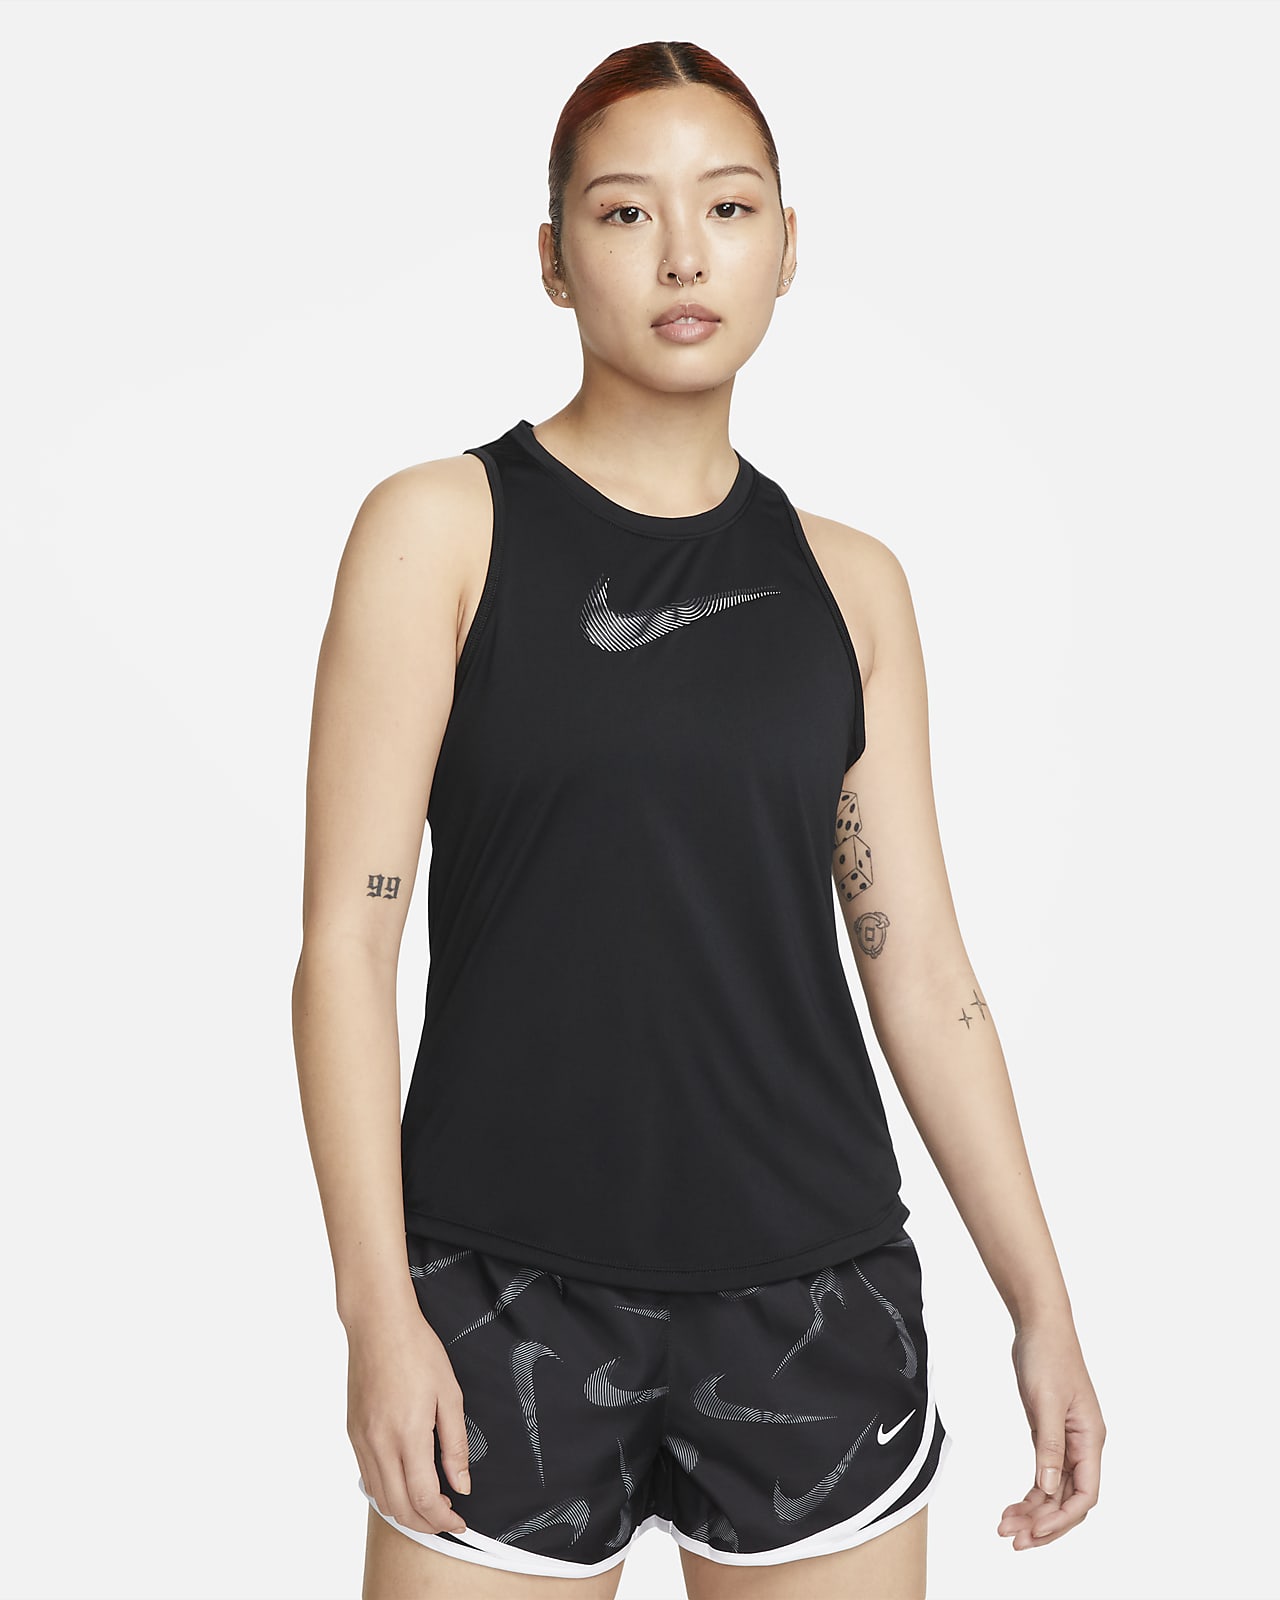 Nike Air Dri Fit Tank Top Womens Black, £10.00